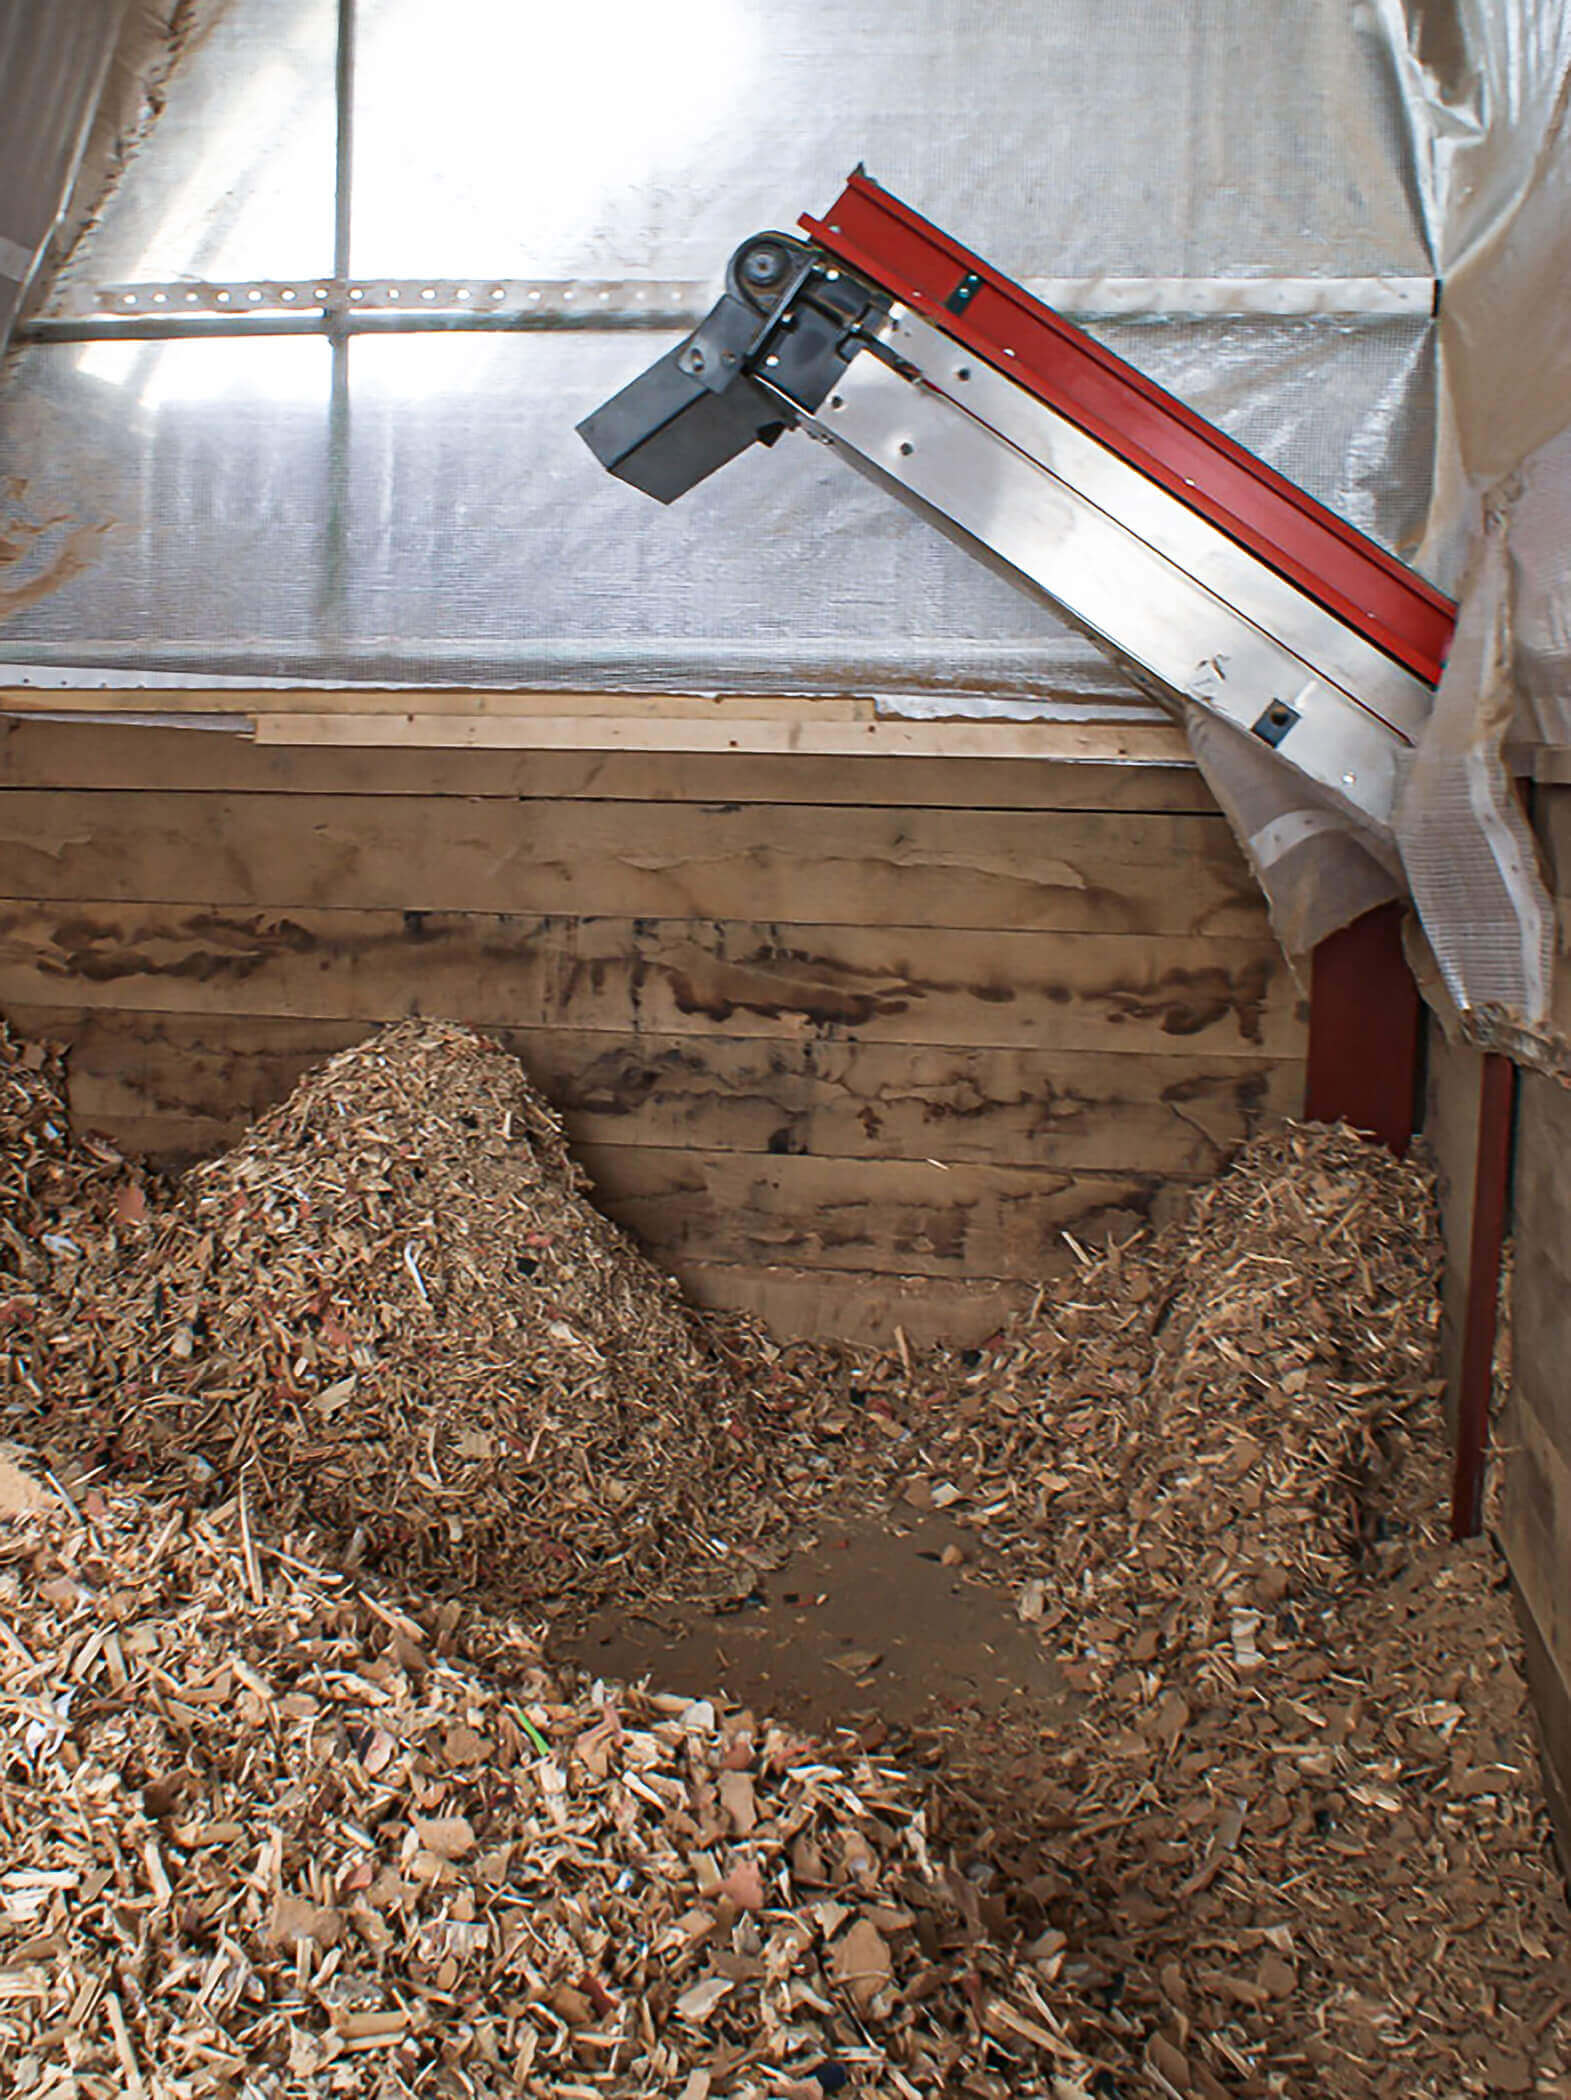 The shredded wood set is transported into the bunker via conveyor belt